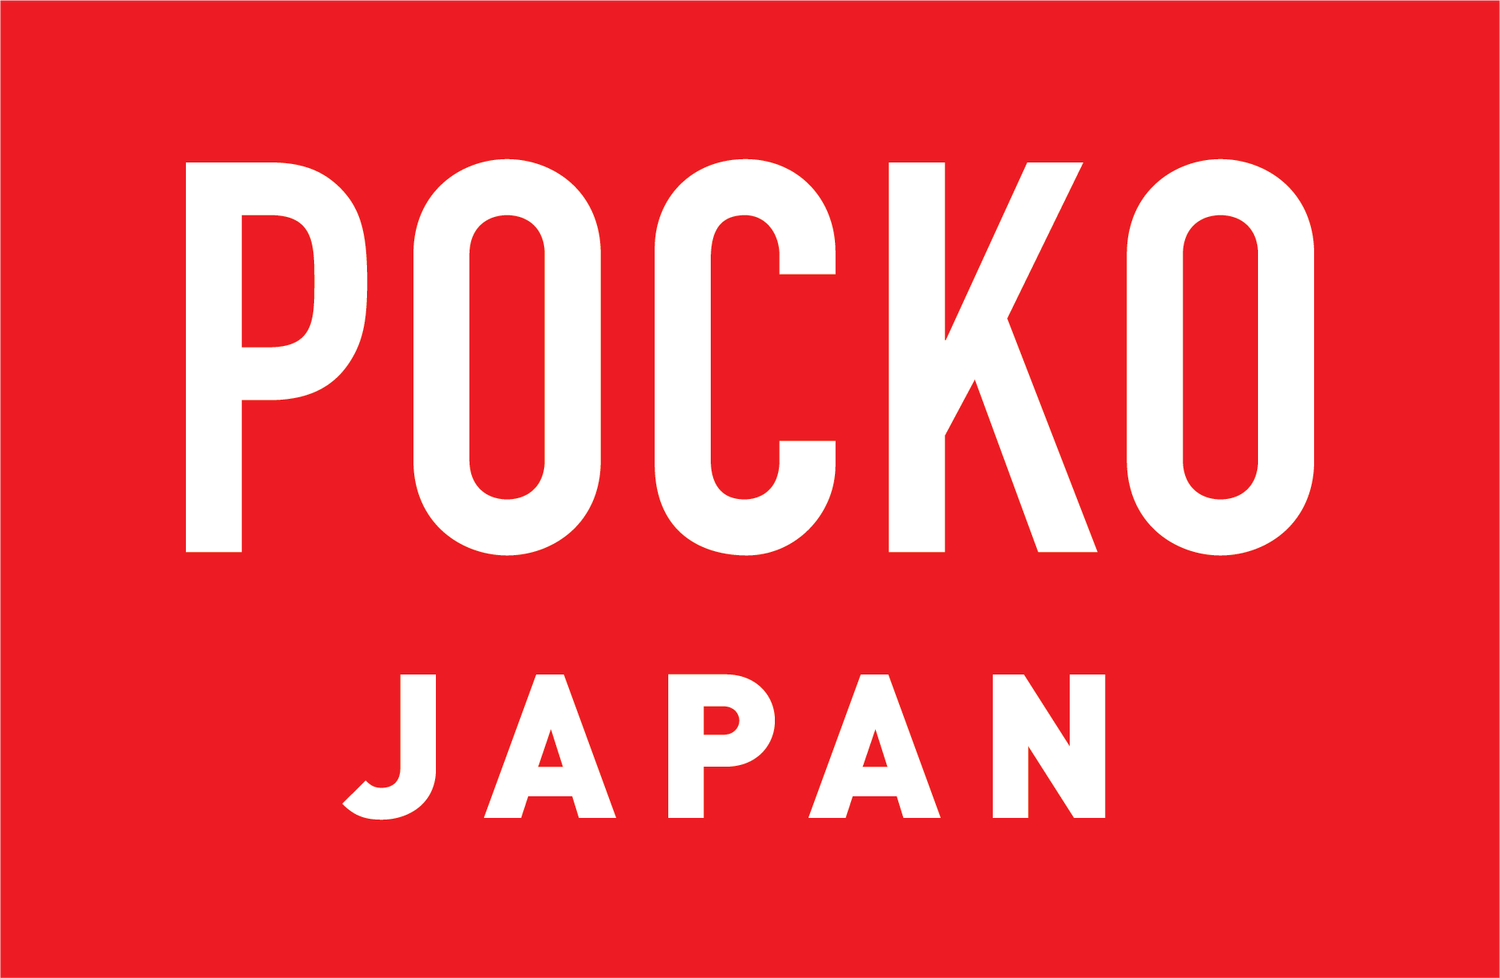 Pocko Japan